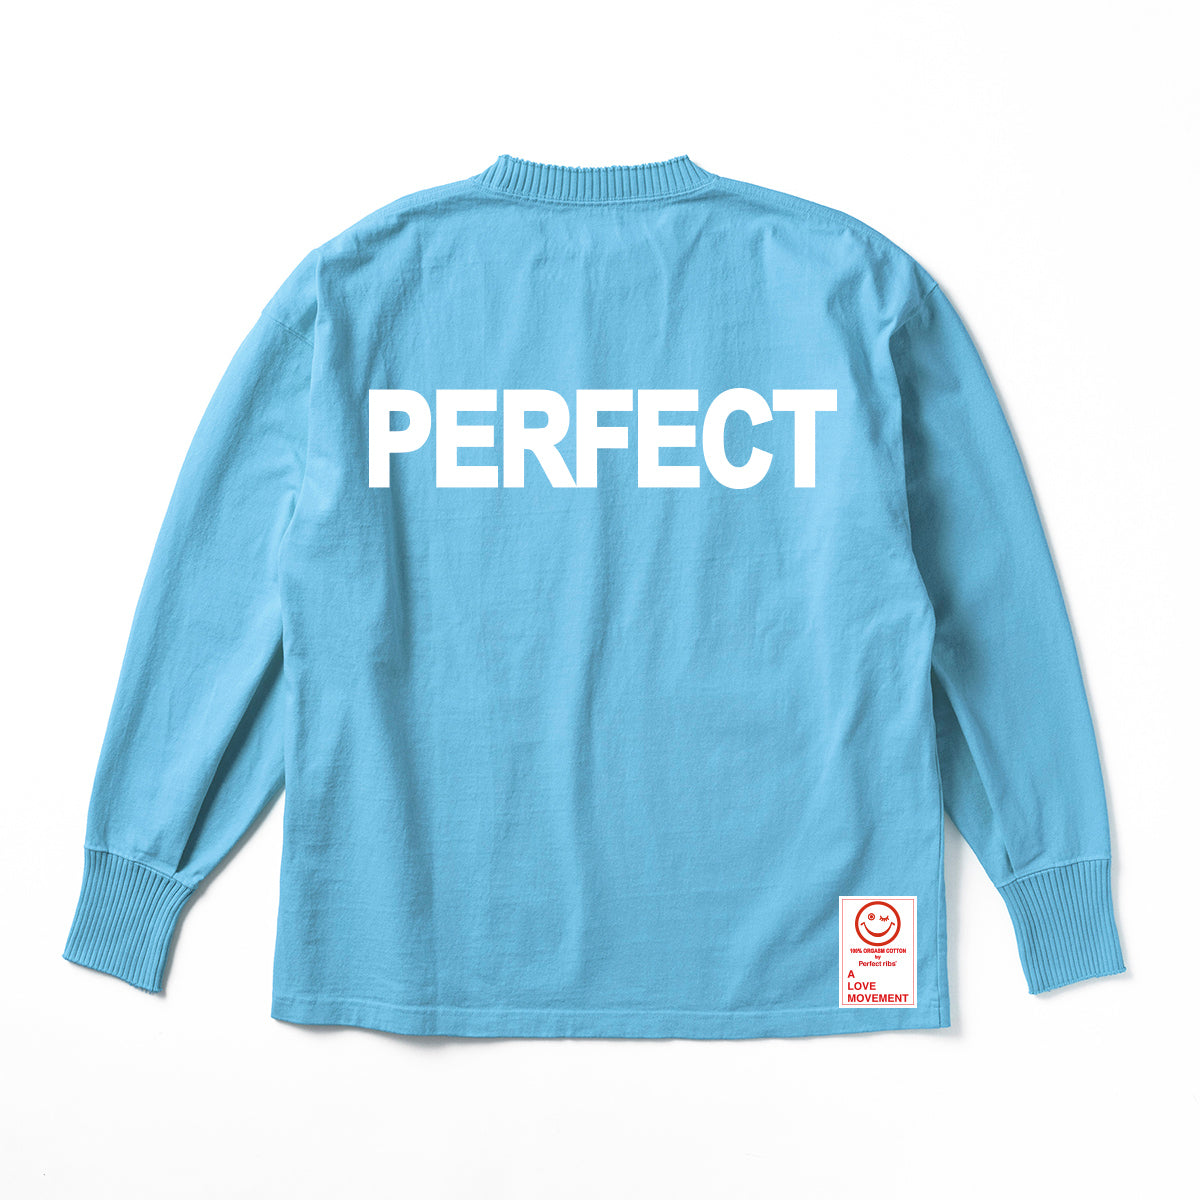 Exclusive Color【Perfect ribs×A LOVE MOVEMENT】 "ART LOVE MUSIC" Basic Long Sleeve T Shirt / Sax×White (ベーシック ショートスリーブ ティーシャツ/サックス×ホワイト)